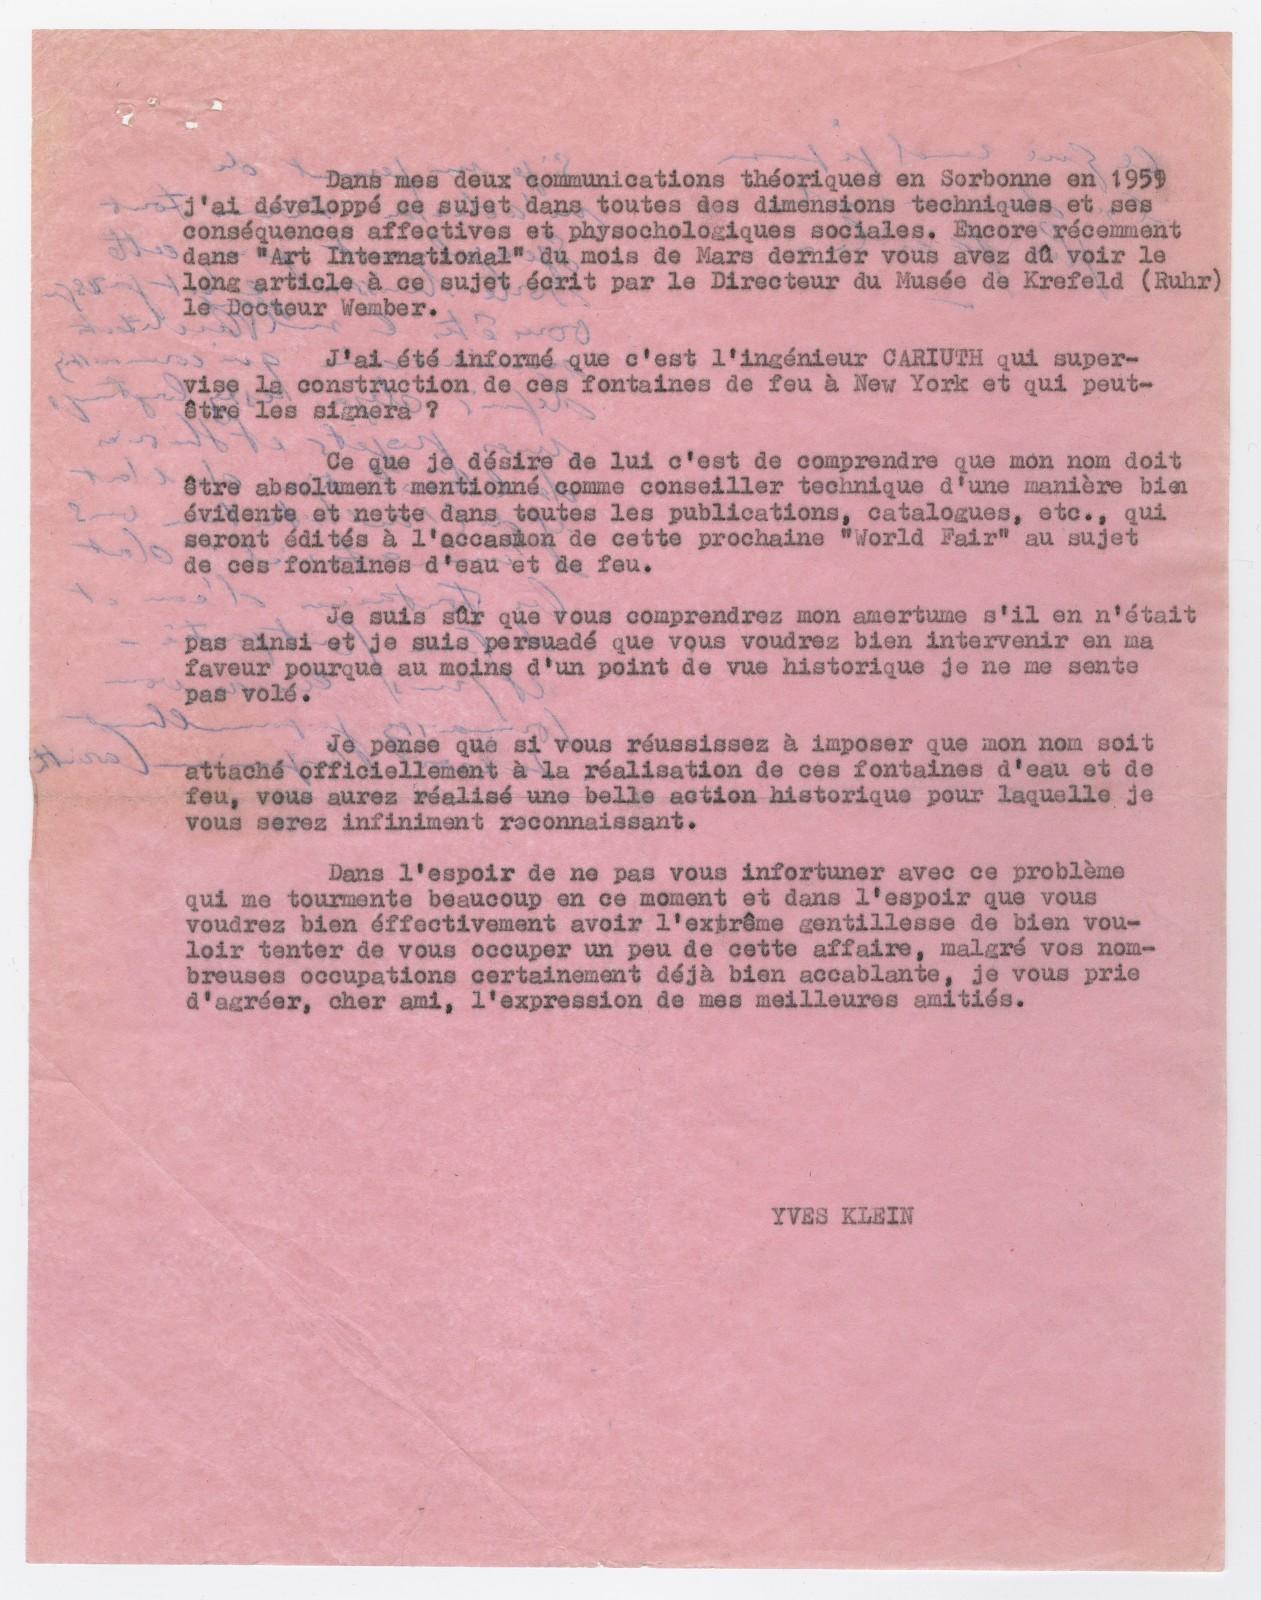 Documents Letter From Yves Klein To Philip Johnson Yves Klein